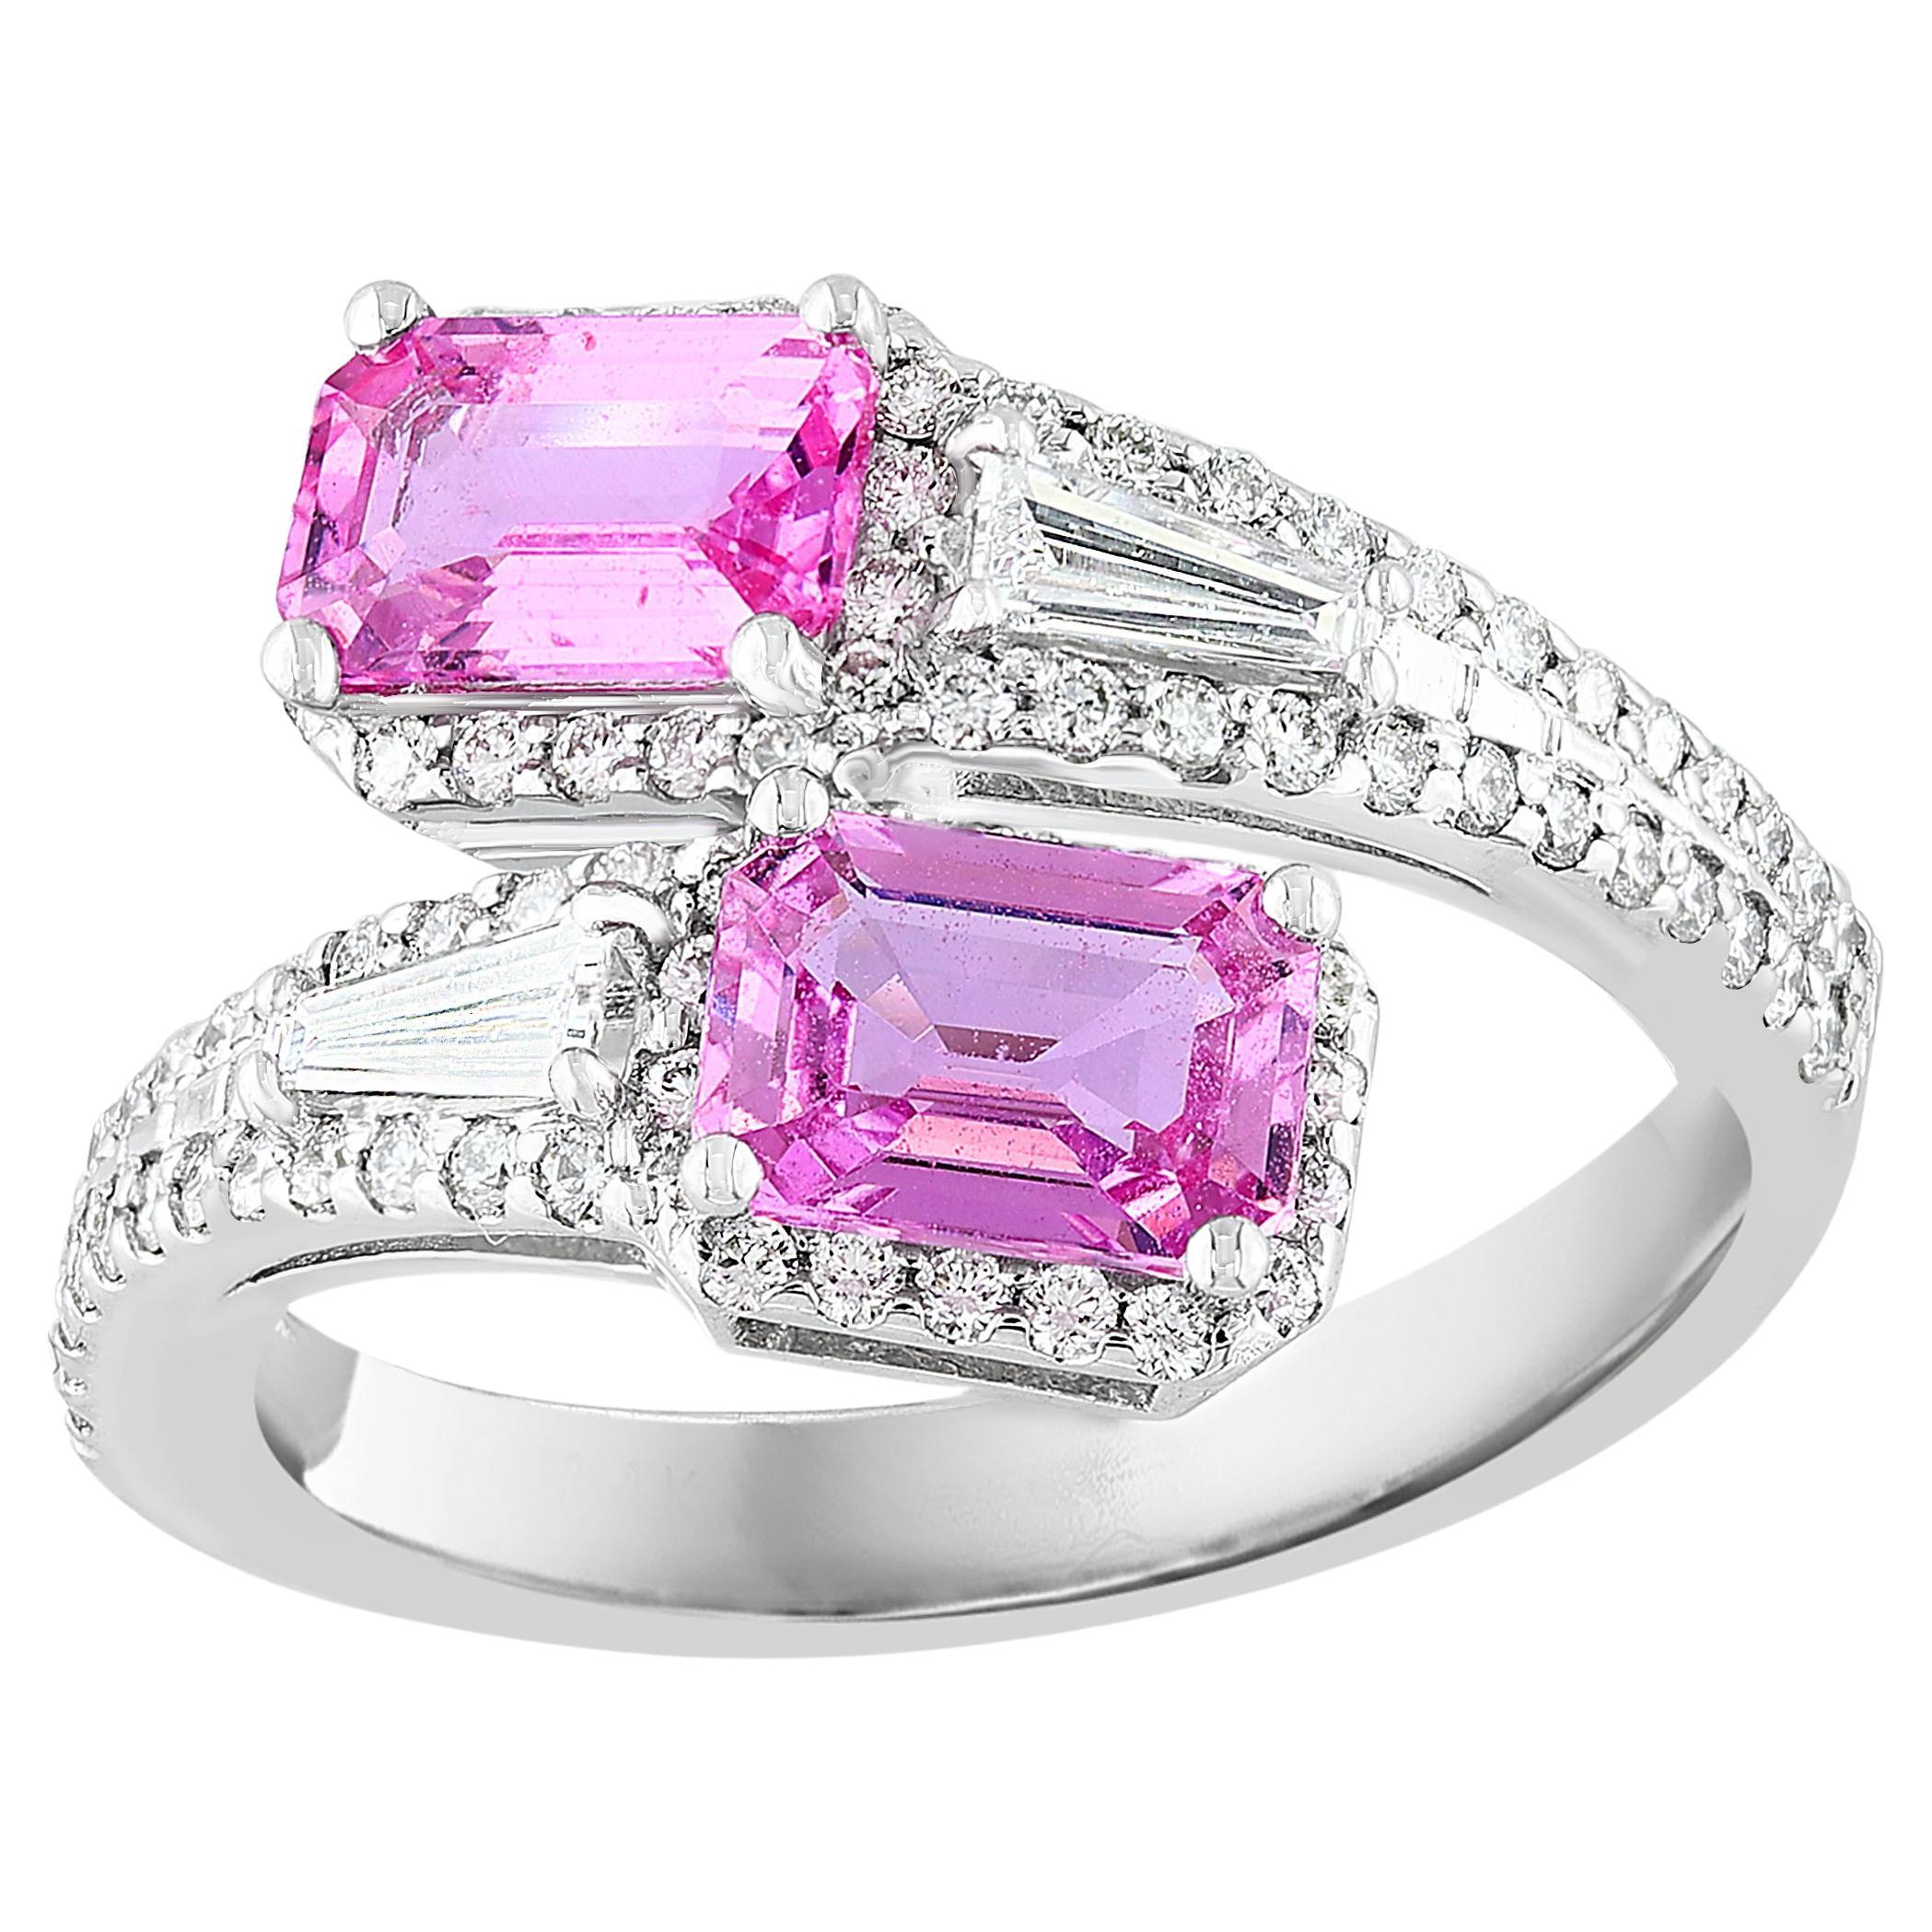 2.15 Carat Emerald Cut Pink Sapphire Diamond Toi Et Moi Ring 14K White Gold For Sale